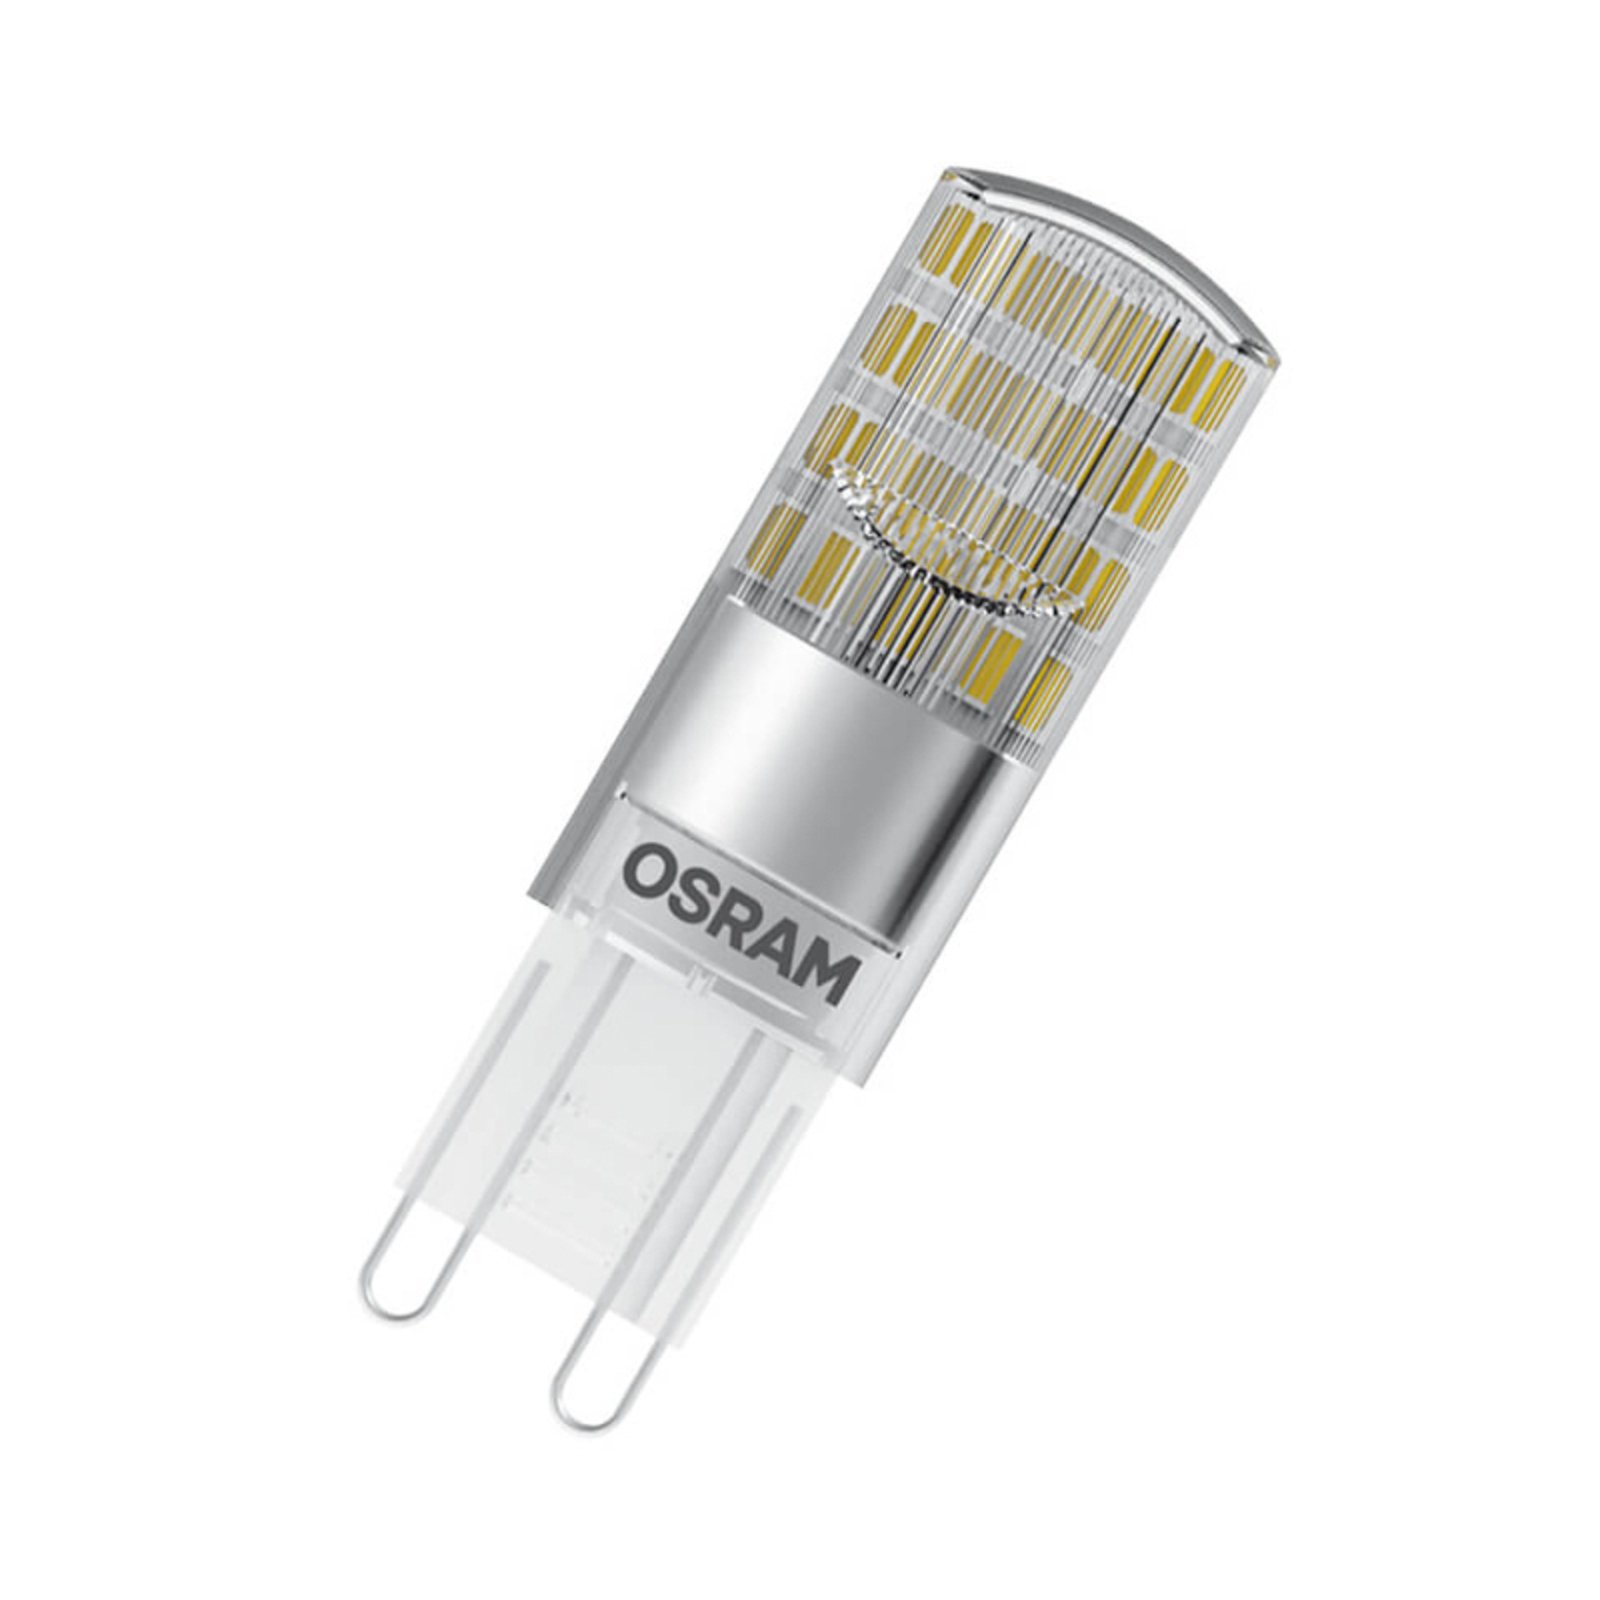 OSRAM LED stiftlamp G9 2,6W universeel wit 320 lm